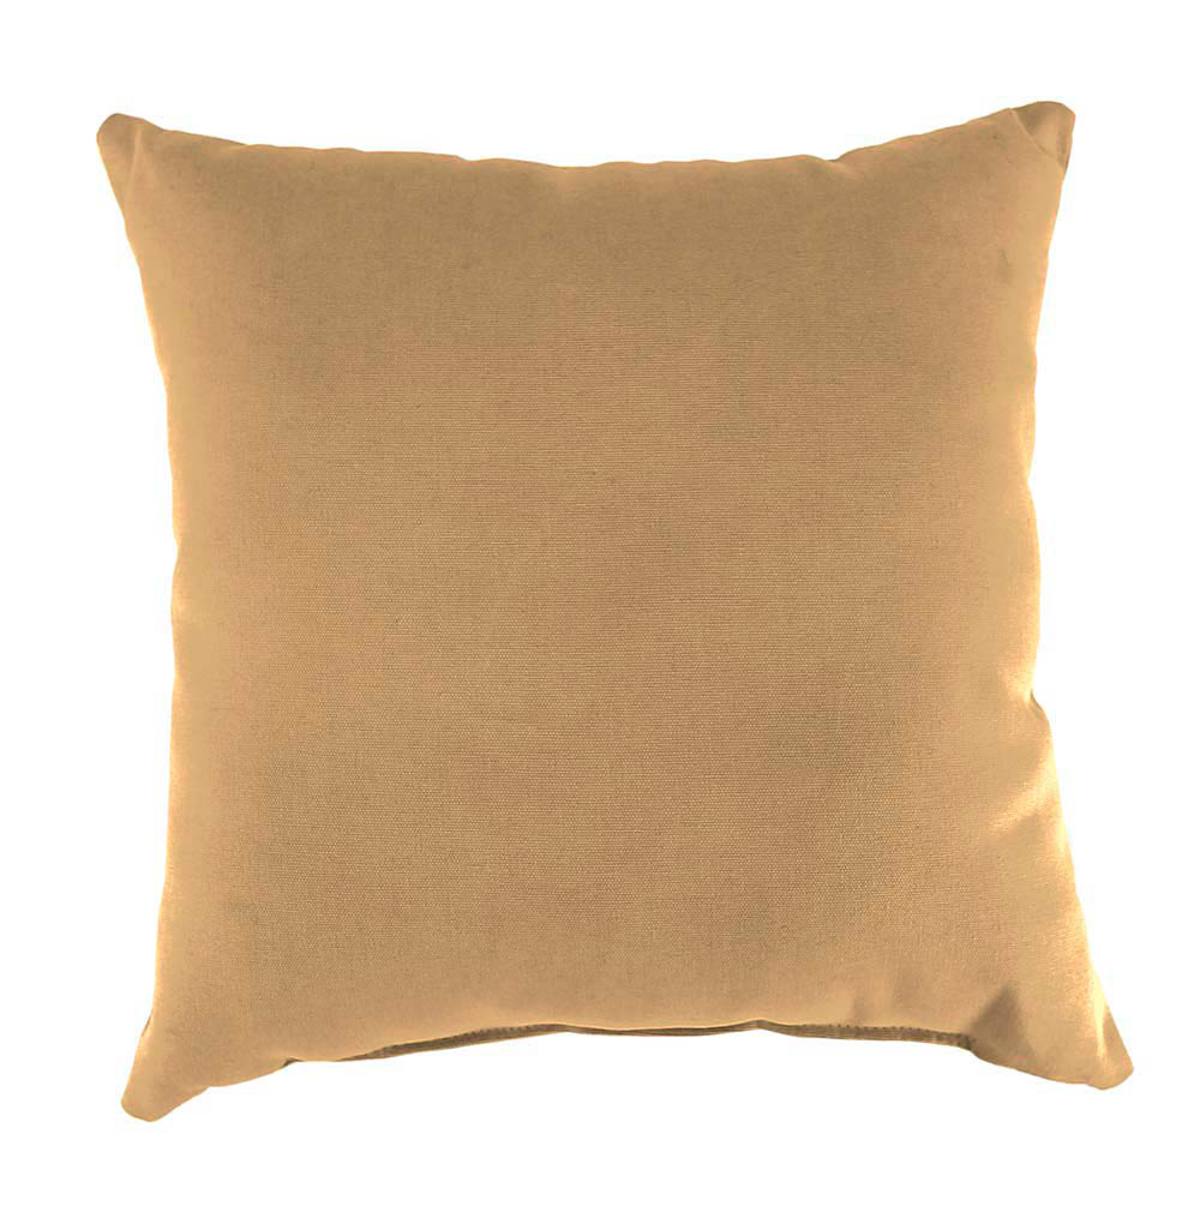 Shenandoah Outdoor Throw Pillow, 22"sq.